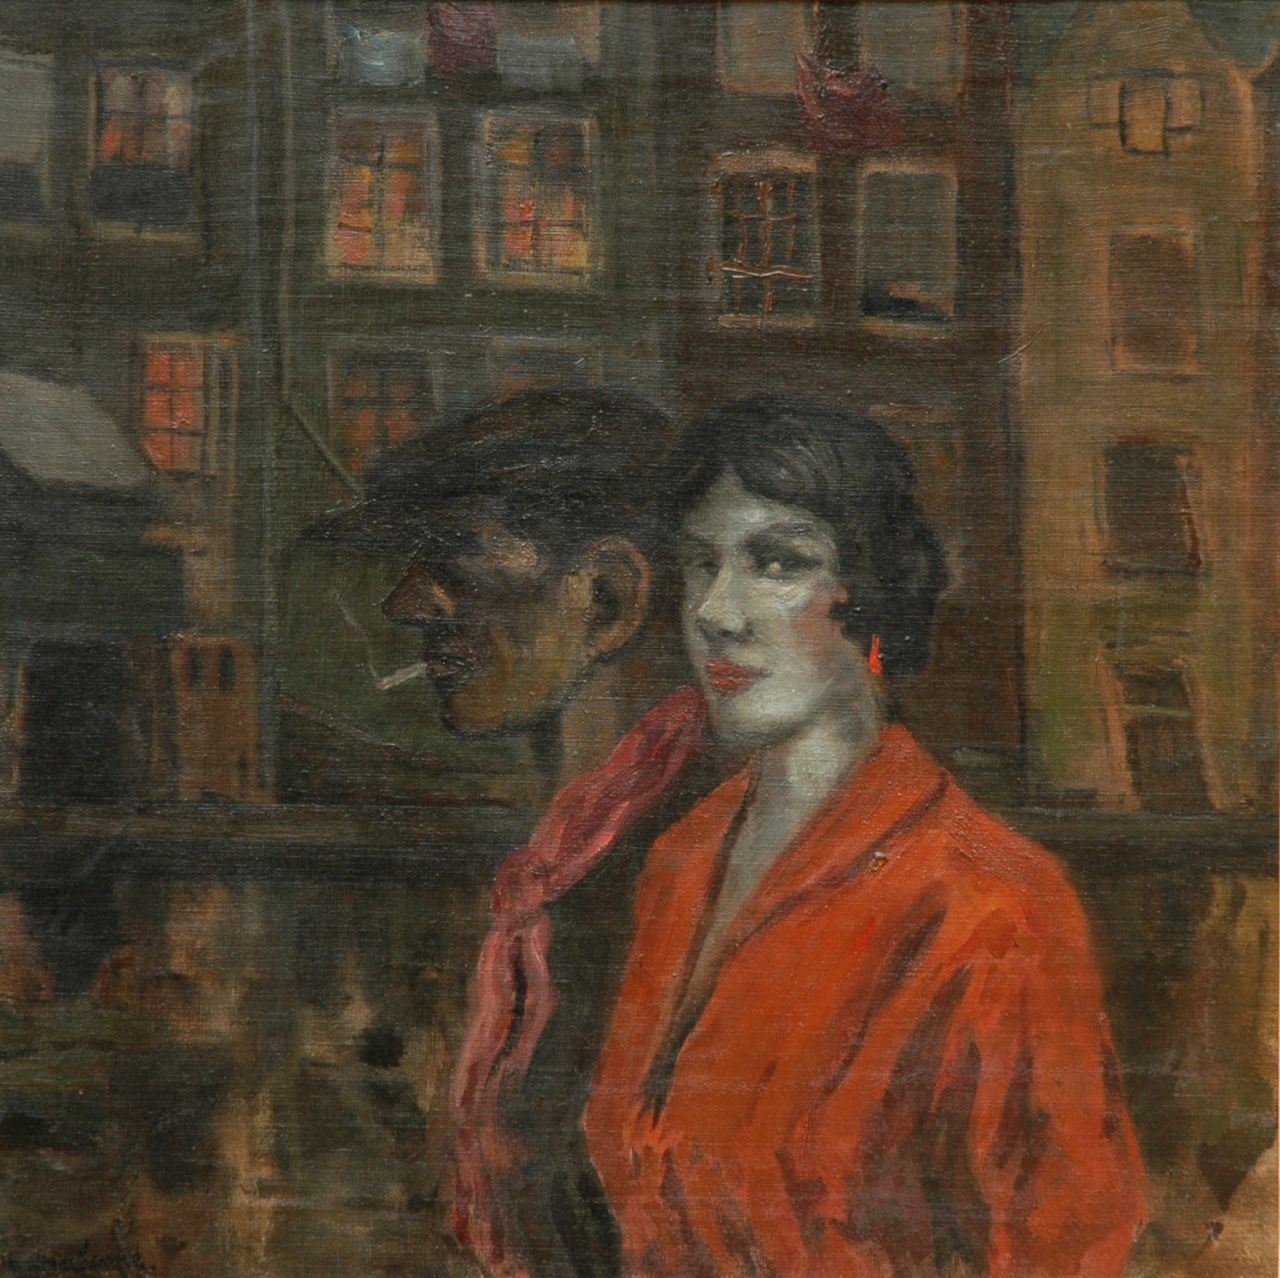 Mackenzie M.H.  | Marie Henri Mackenzie, Op de Walletjes, Amsterdam, olieverf op doek 60,1 x 60,1 cm, gesigneerd linksonder